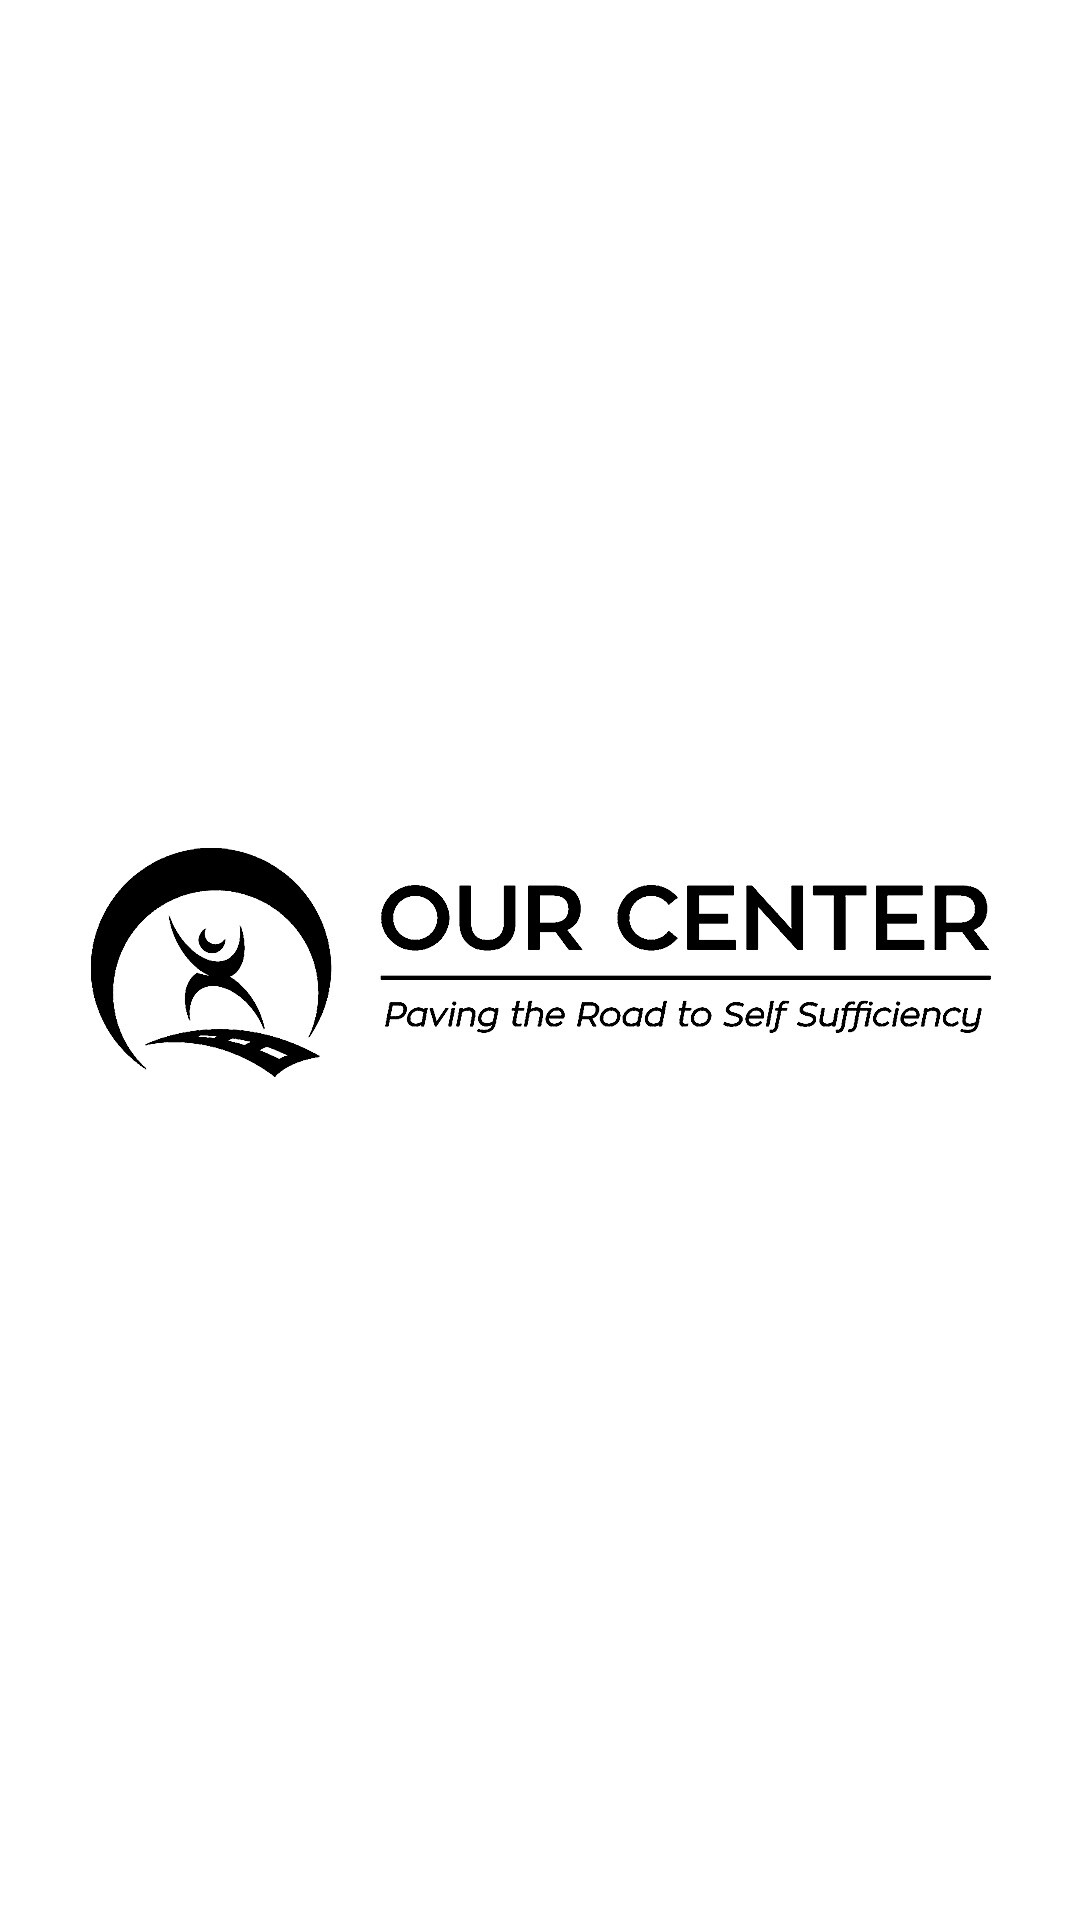 Our Center